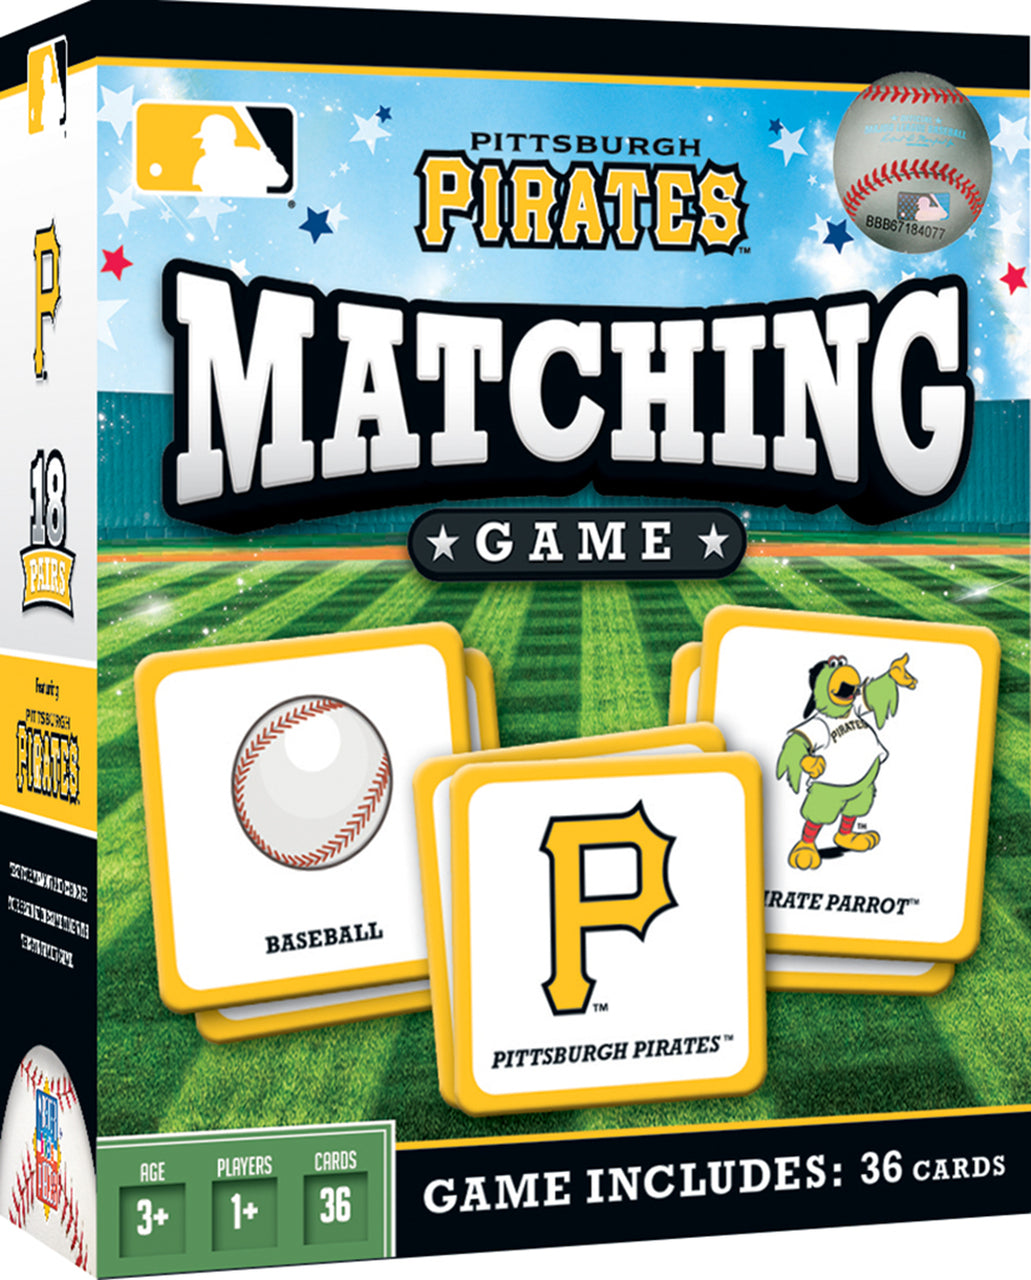 MLB PITTSBURGH PIRATES MATCHING GAME